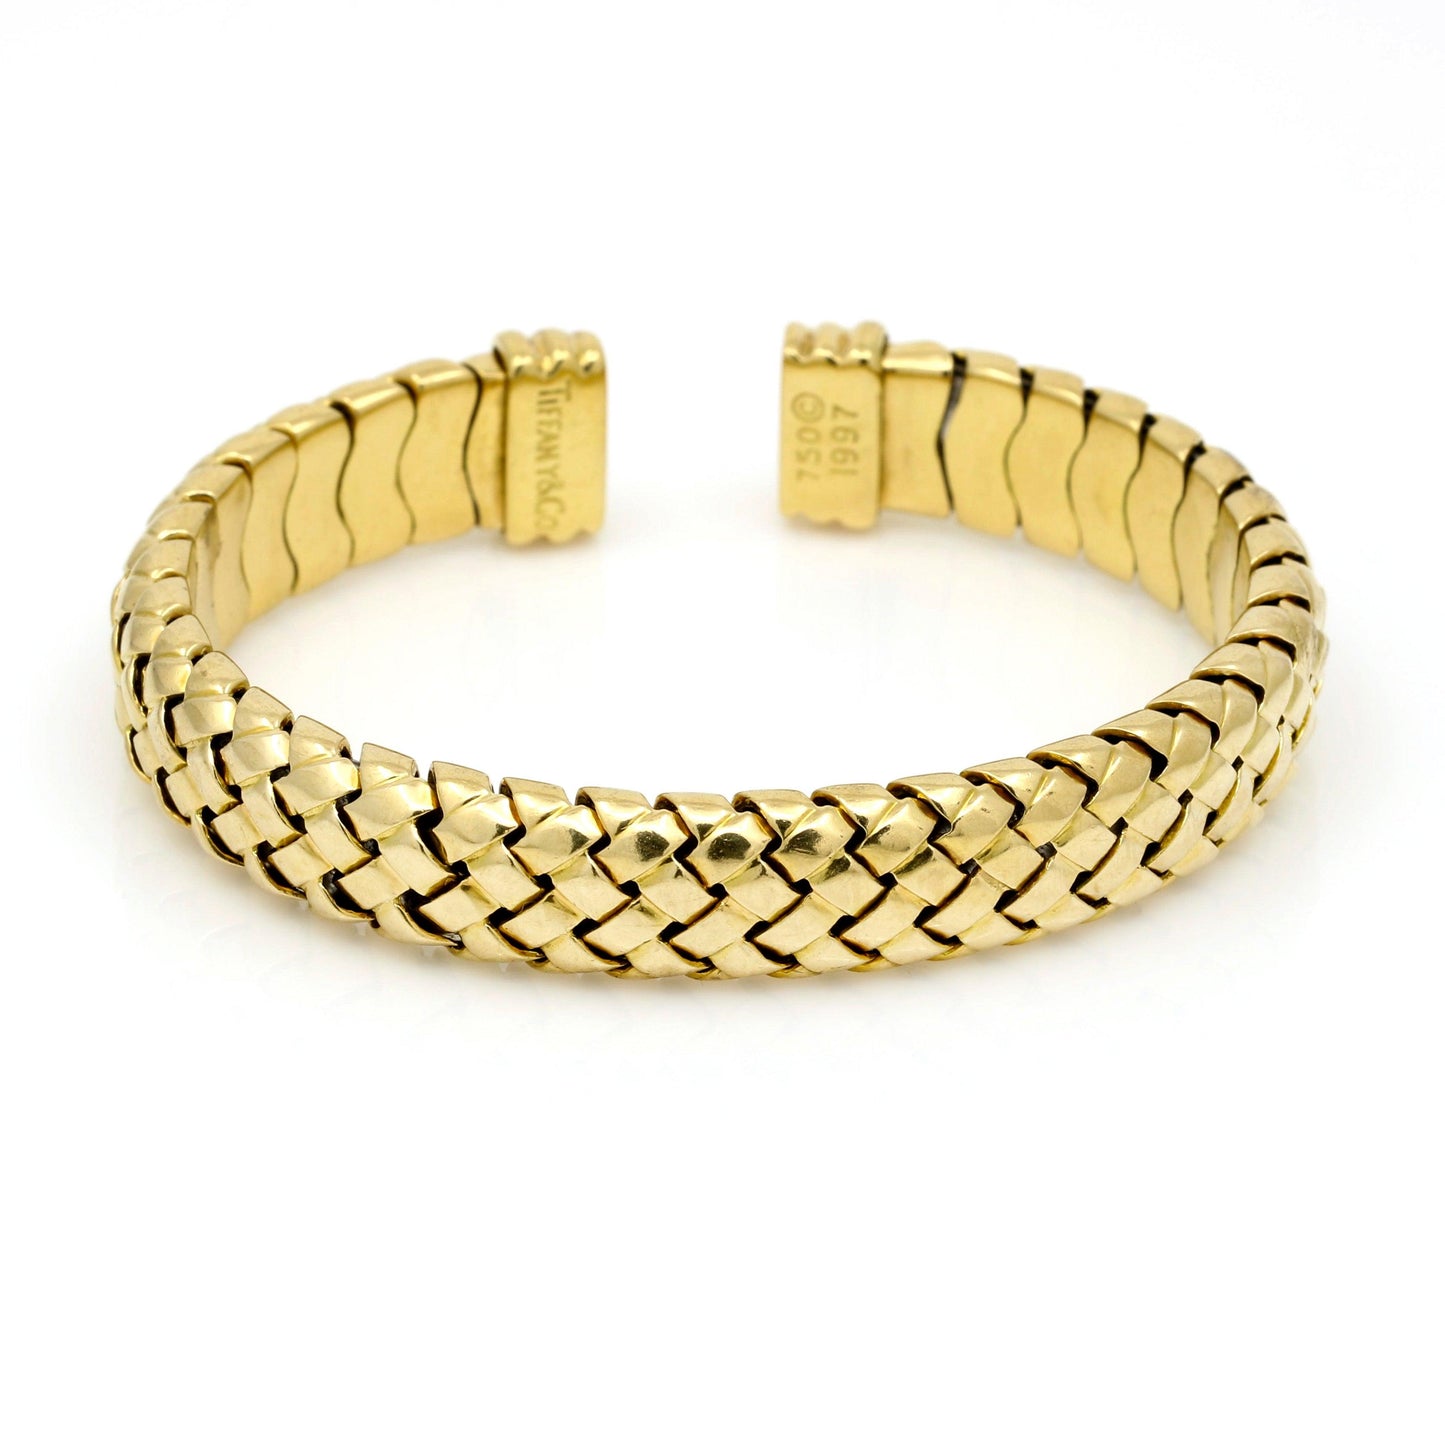 Tiffany & Co. Vannerie 1997 Woven Cuff Bracelet in 18k Yellow Gold - 31 Jewels Inc.